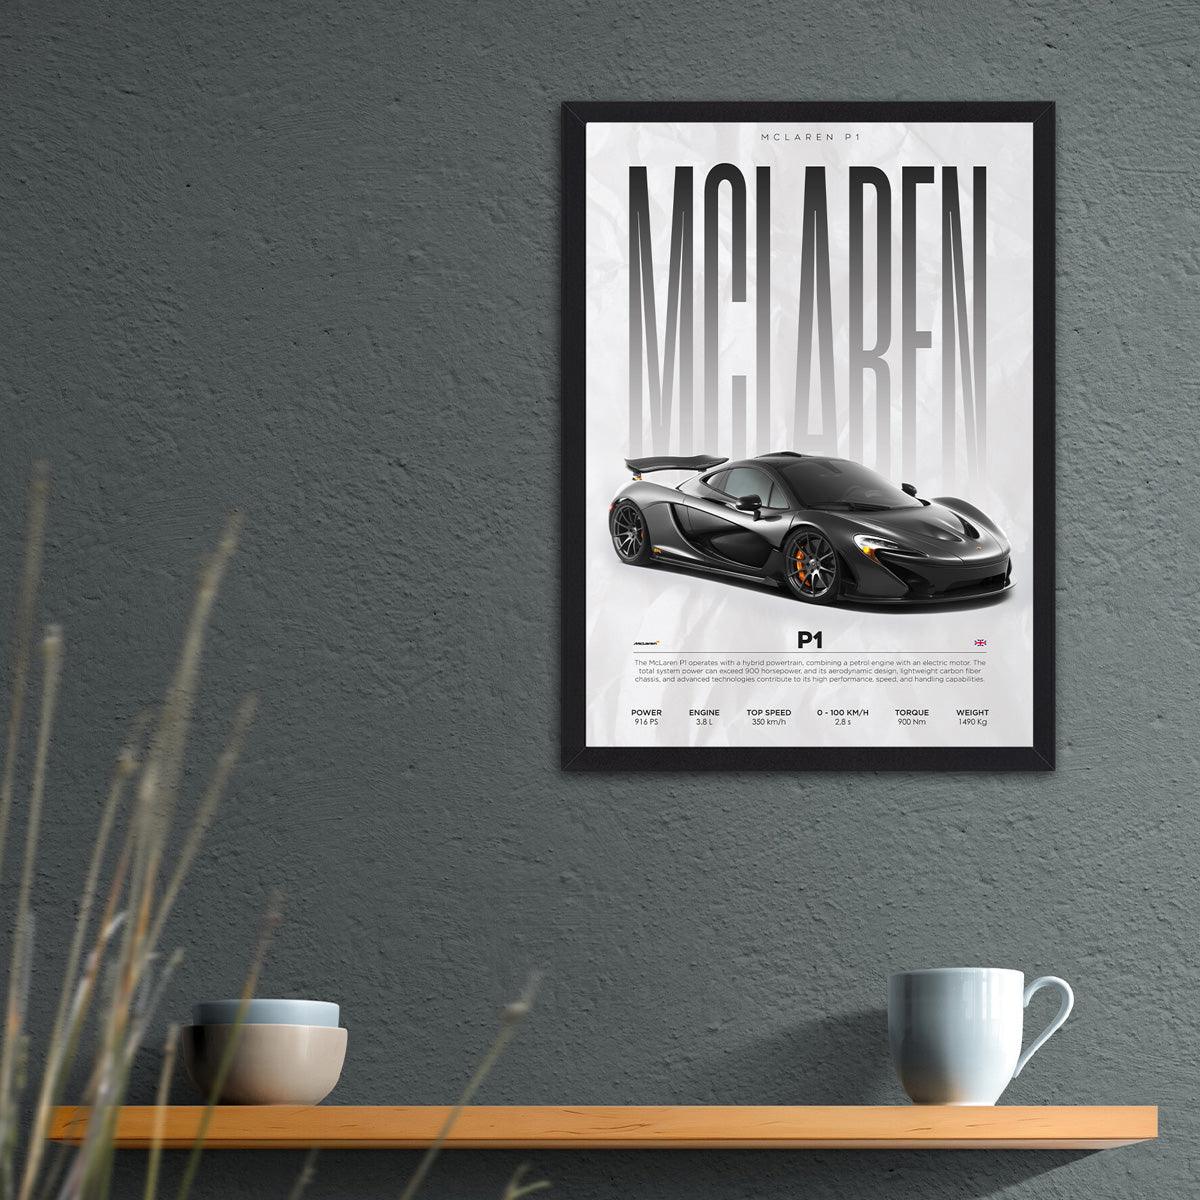 McLaren P1 - Apex of Engineering - PixMagic